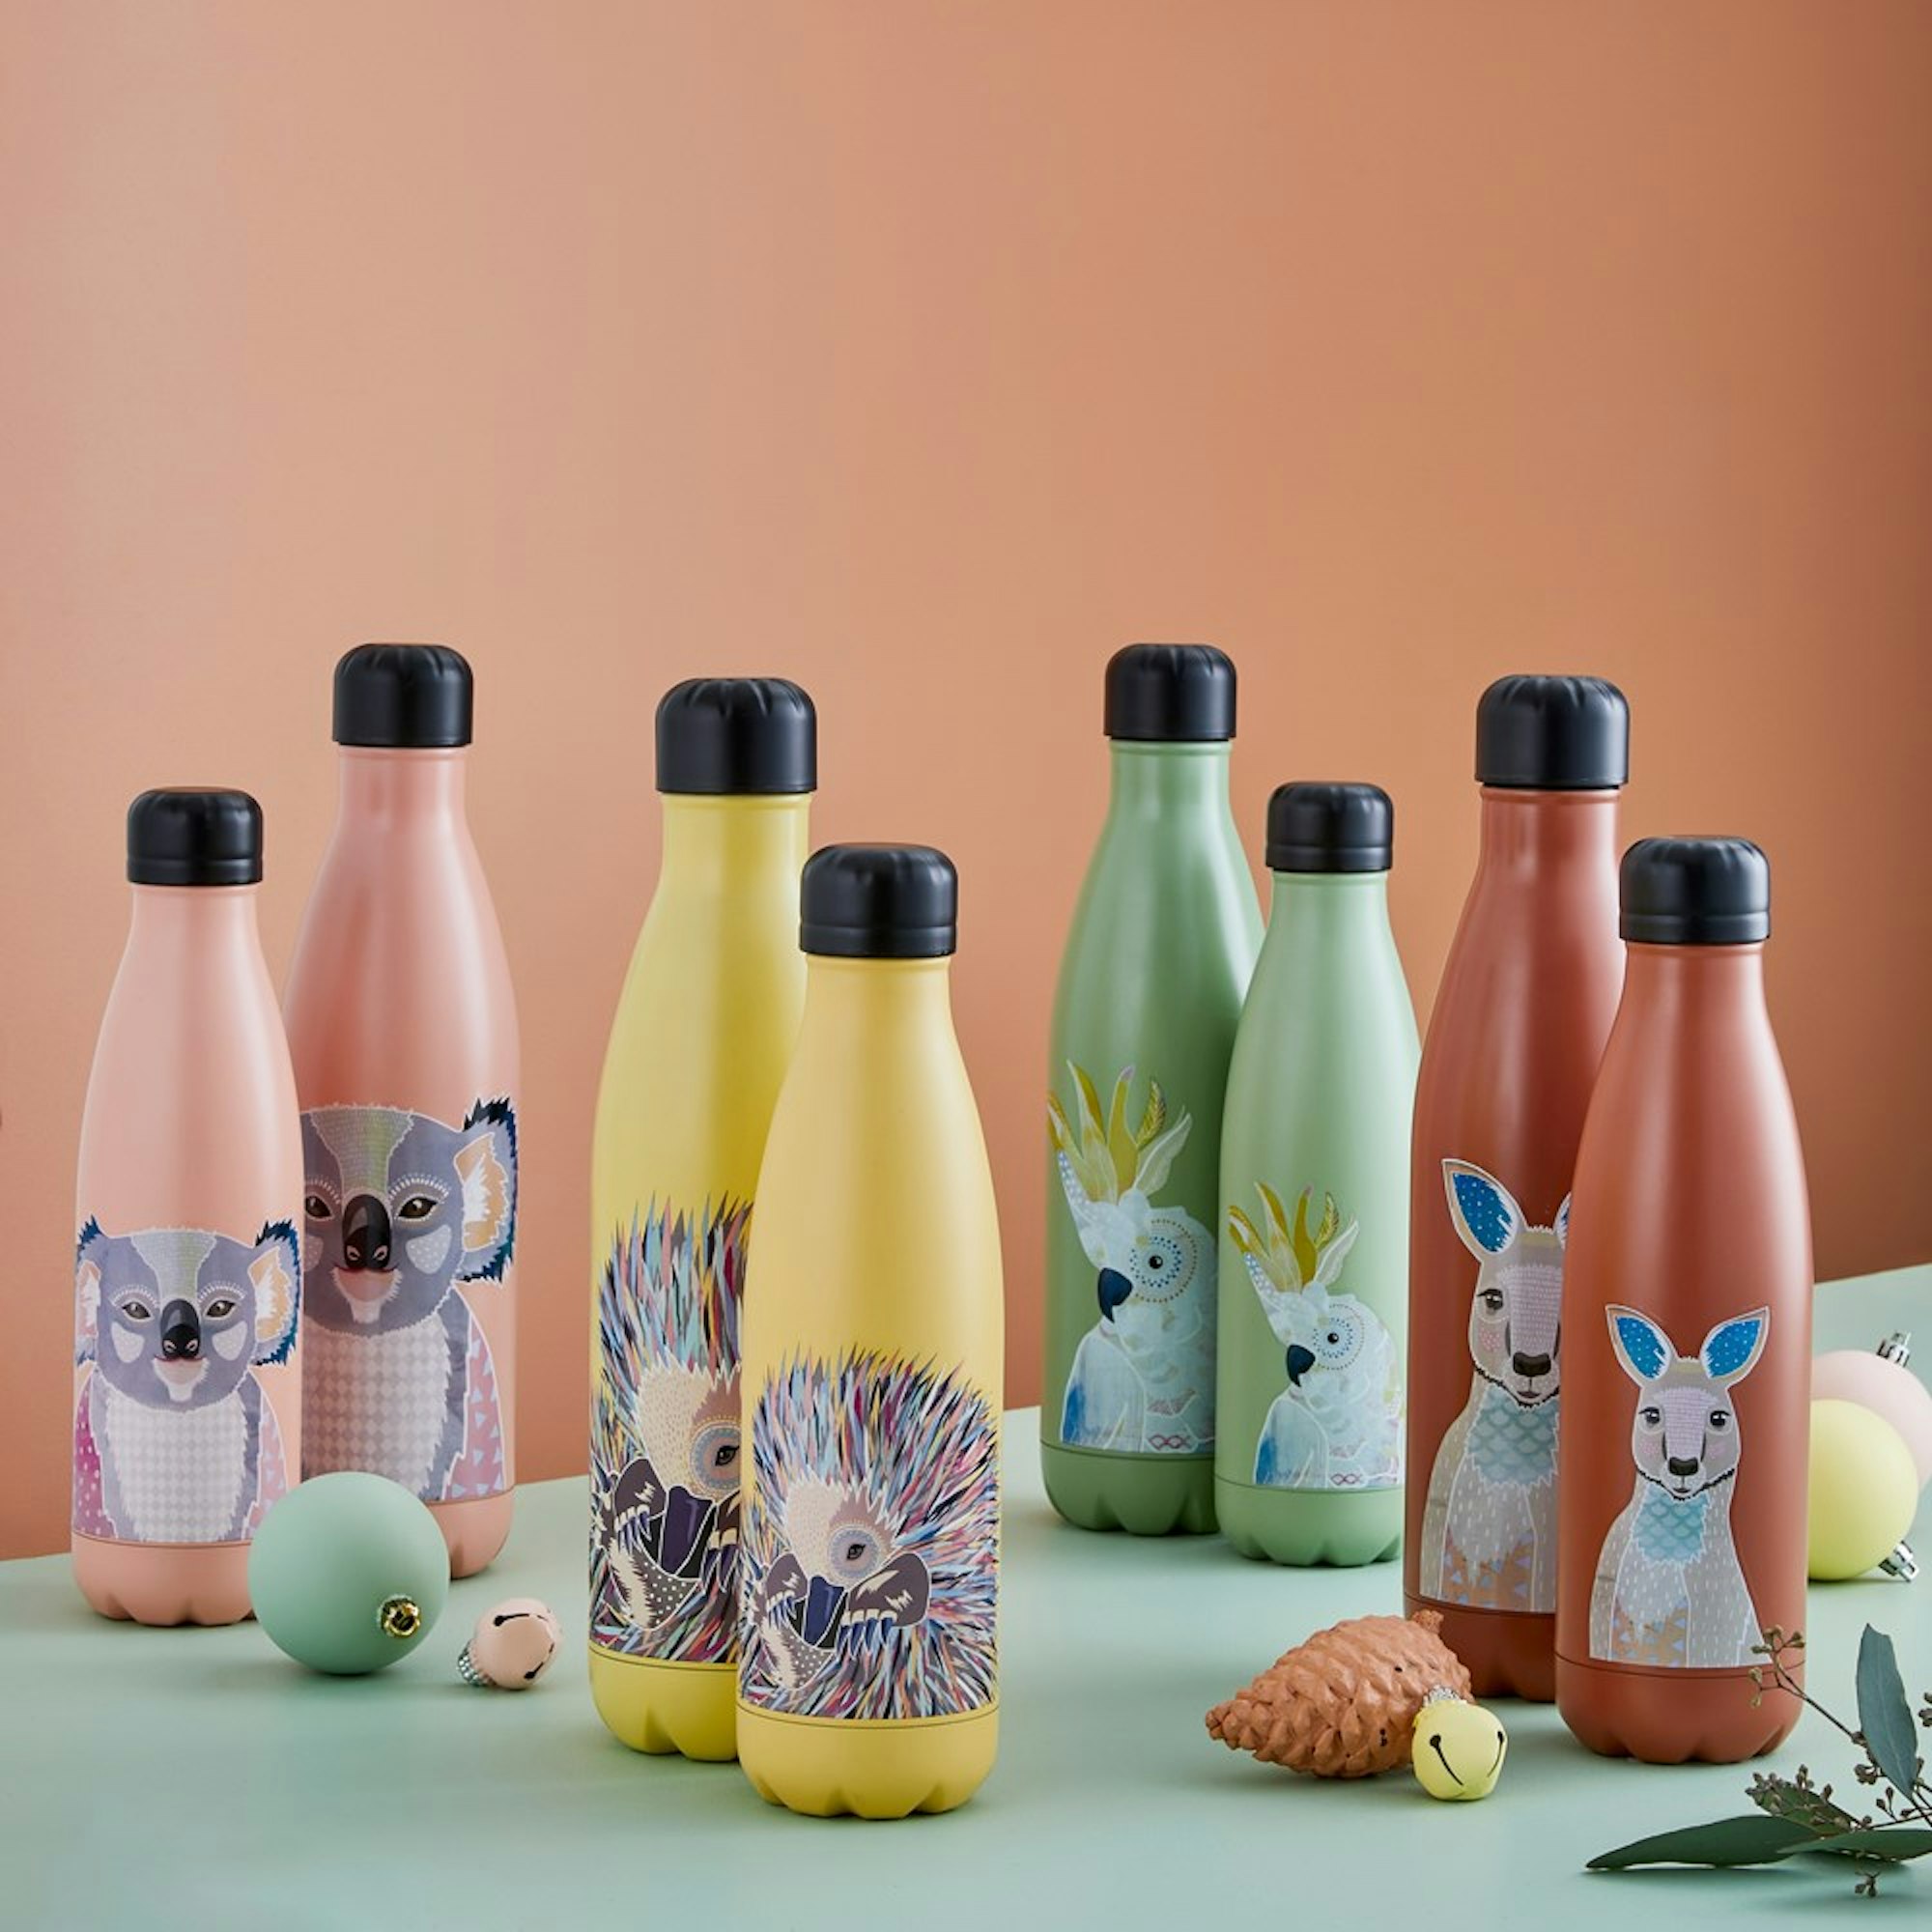 Water bottles with Australian animal prints